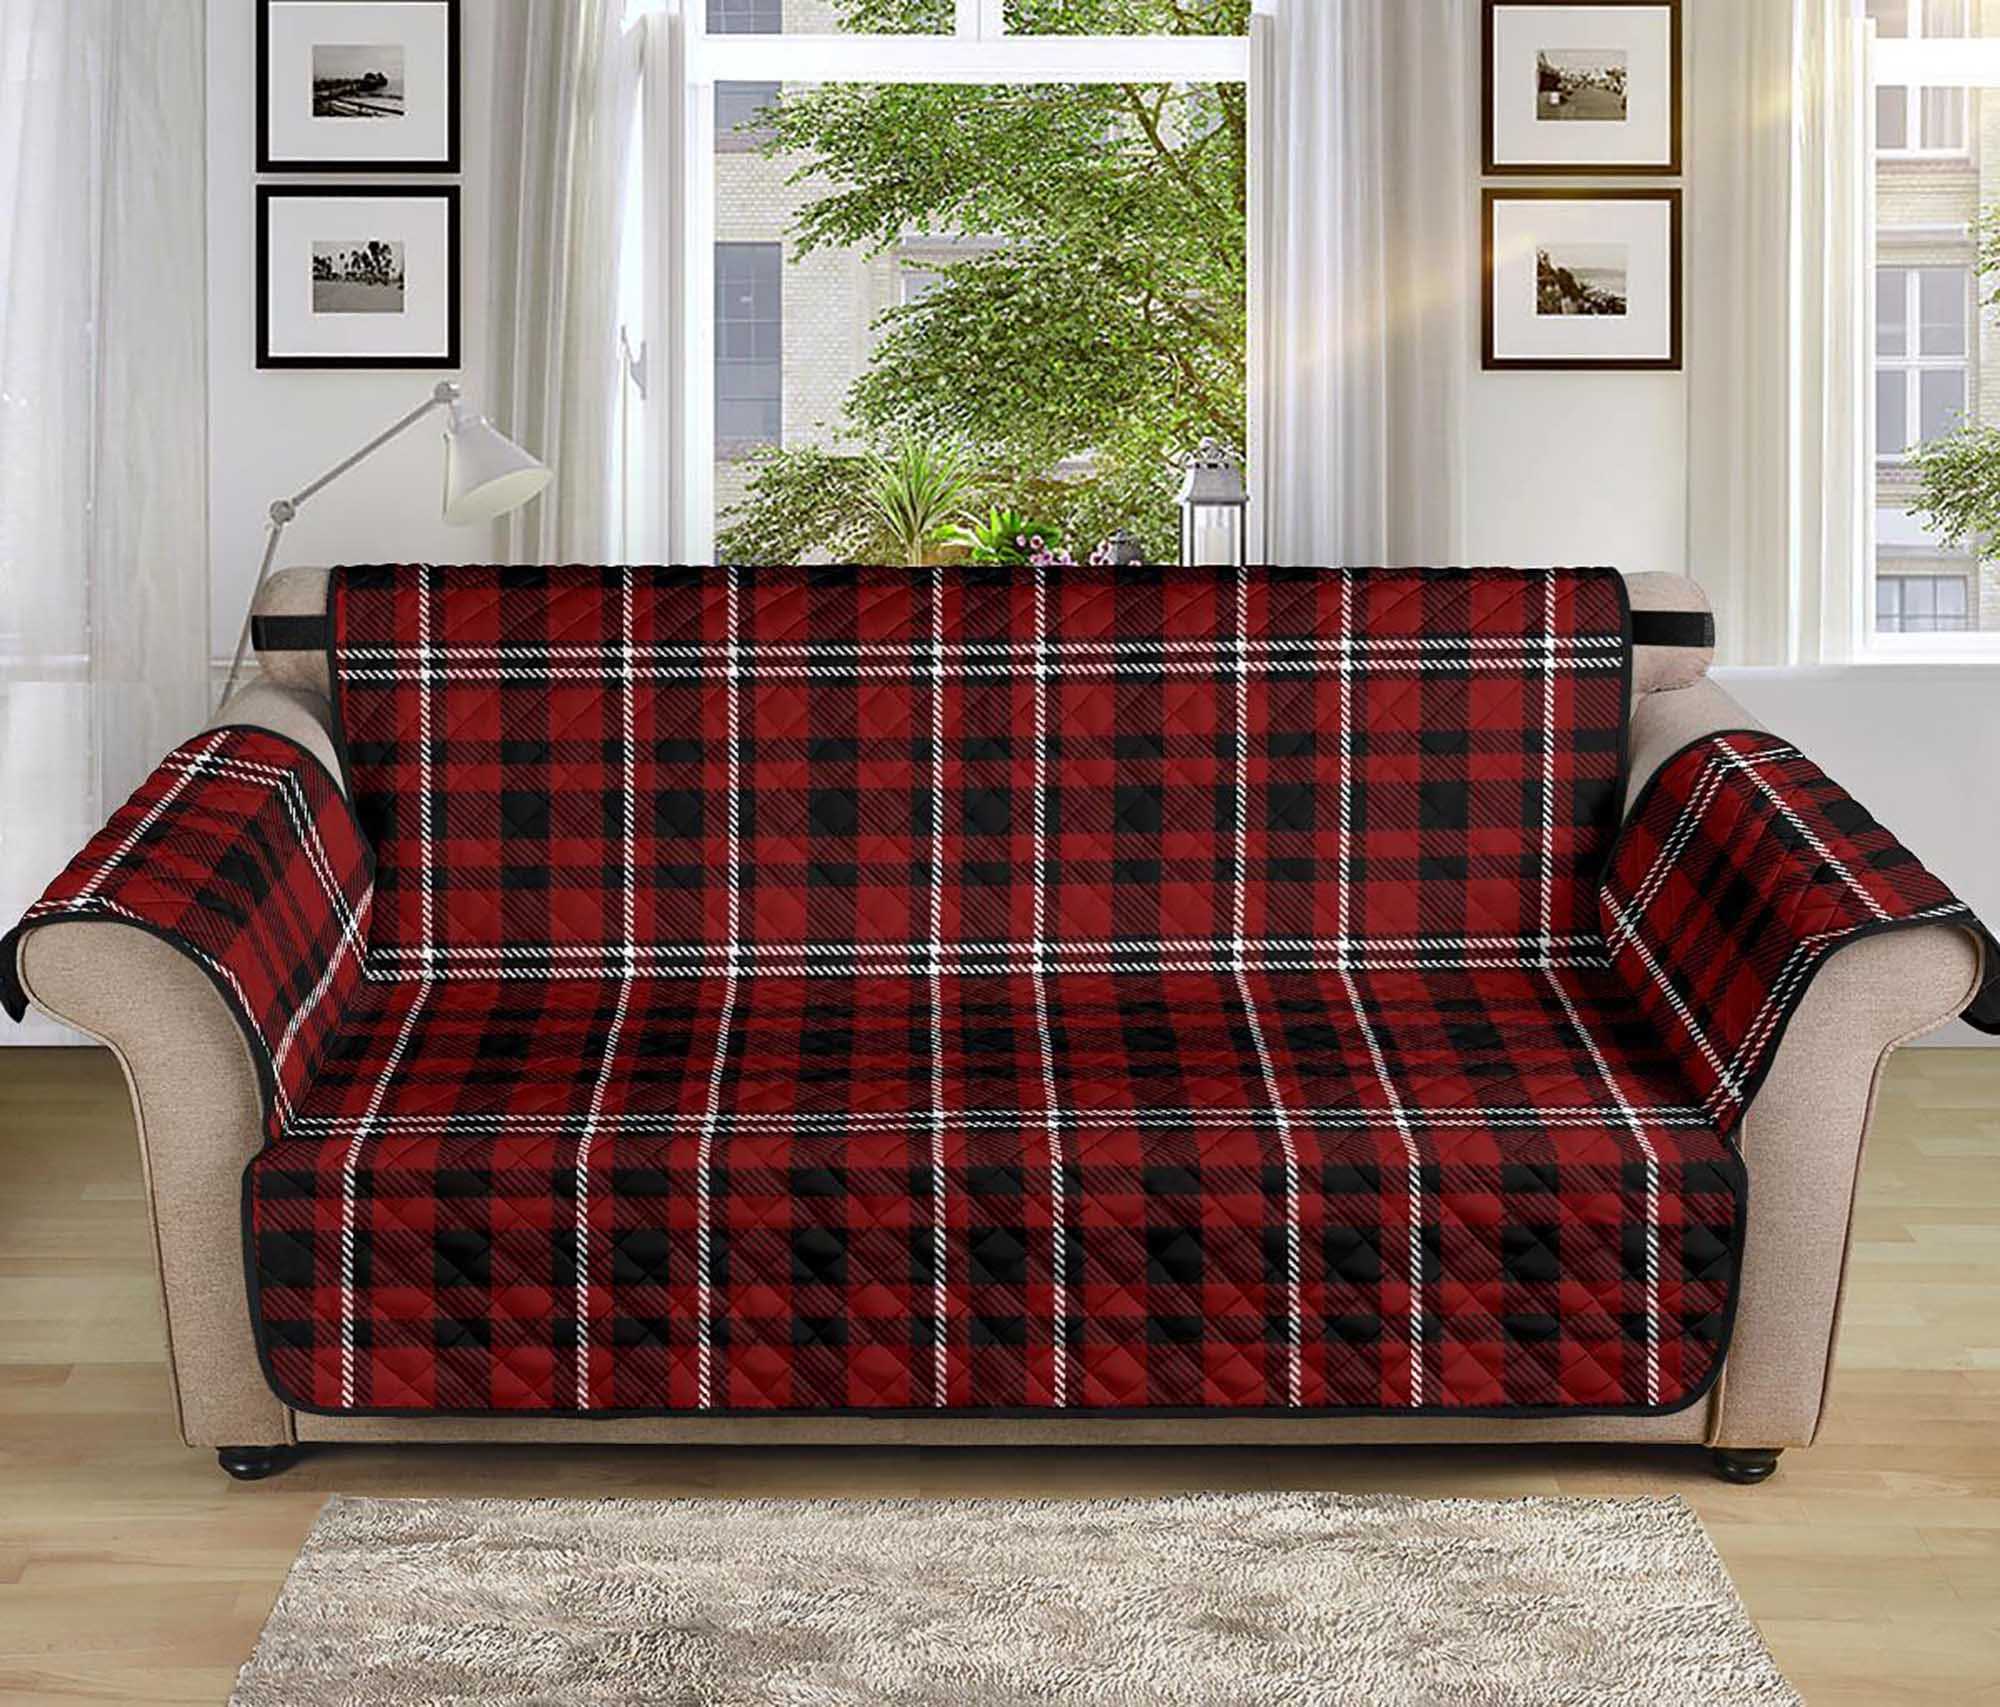 Plaid Couch Slipcover Dark Red, Black, White Tartan 70 Seat Width